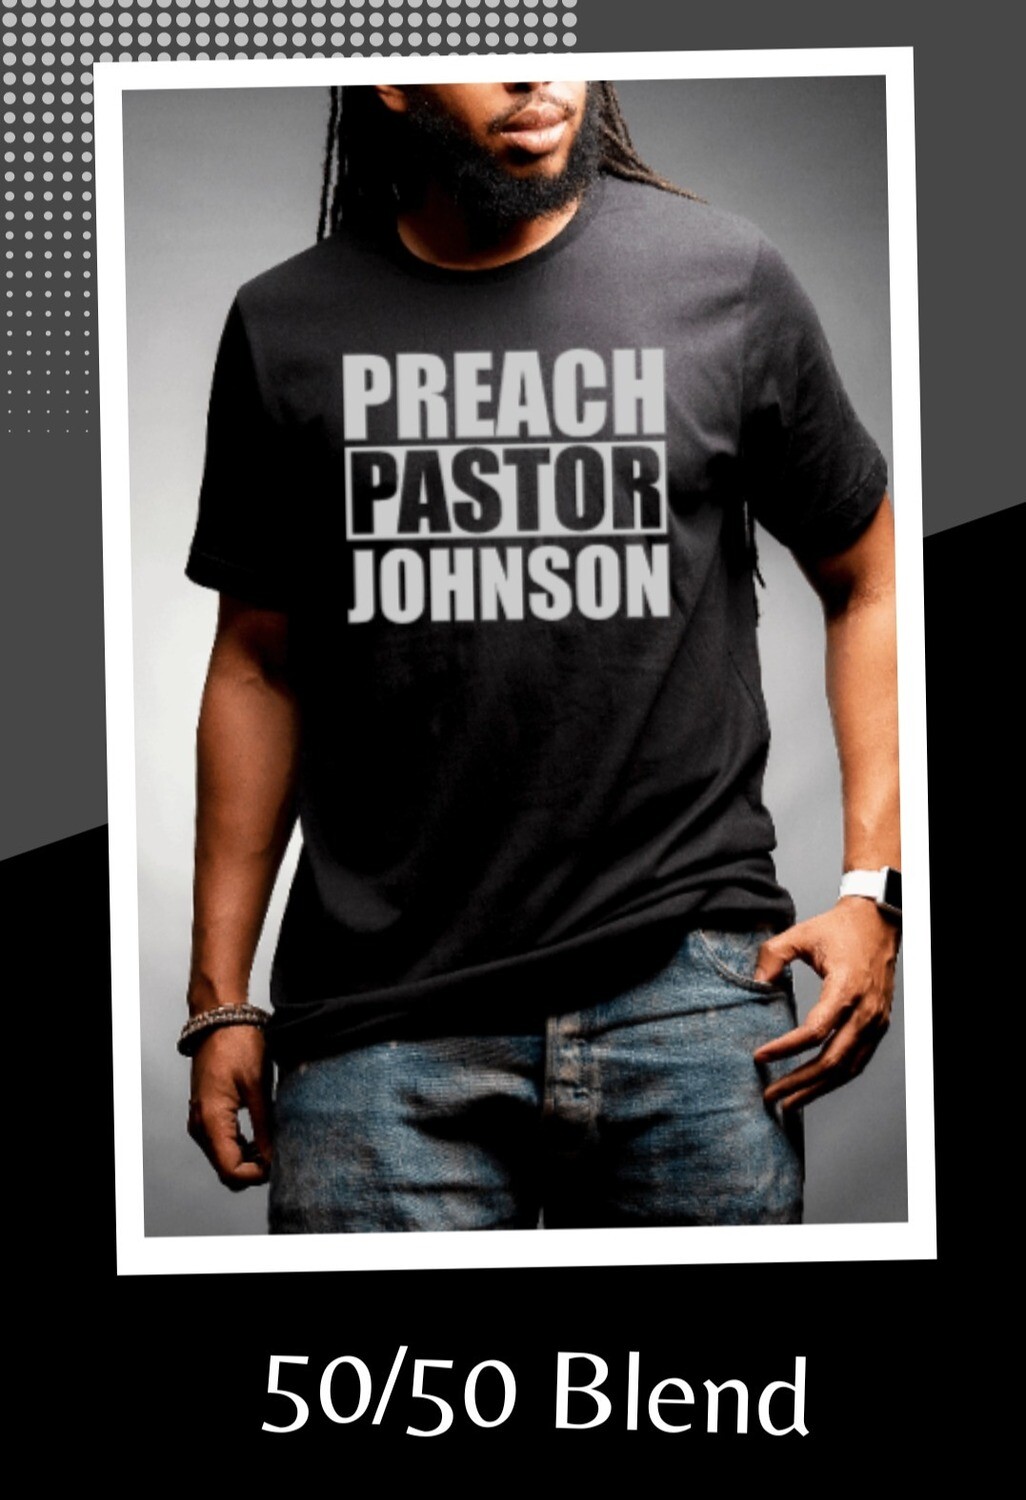 "Preach Pastor Johnson" 
50/50 Blend